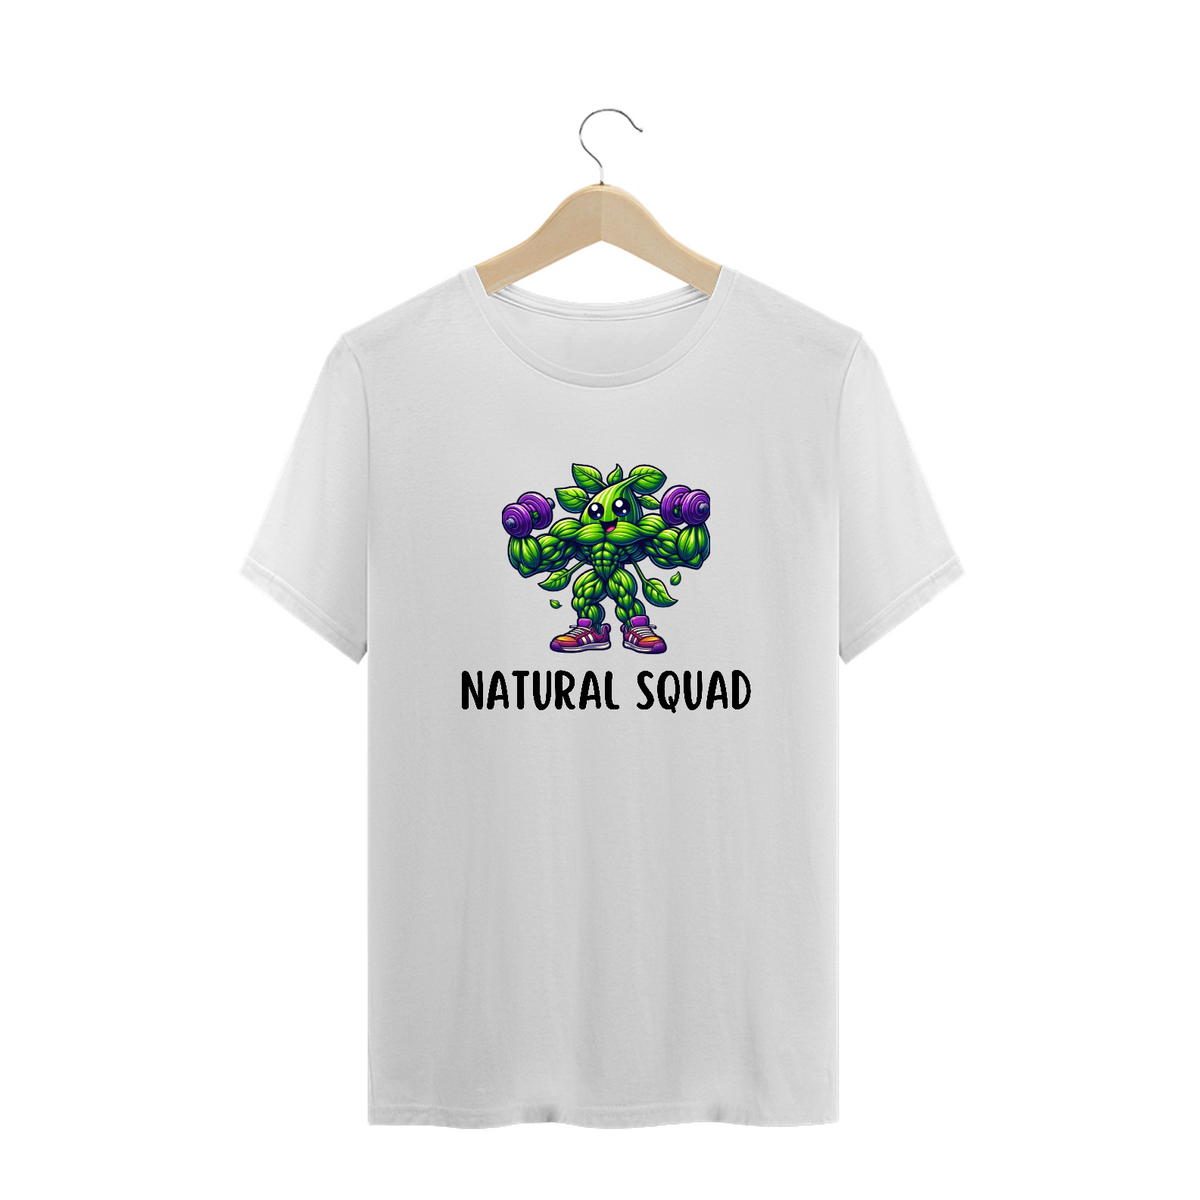 Nome do produto: Camiseta Natural squad PLUS SIZE